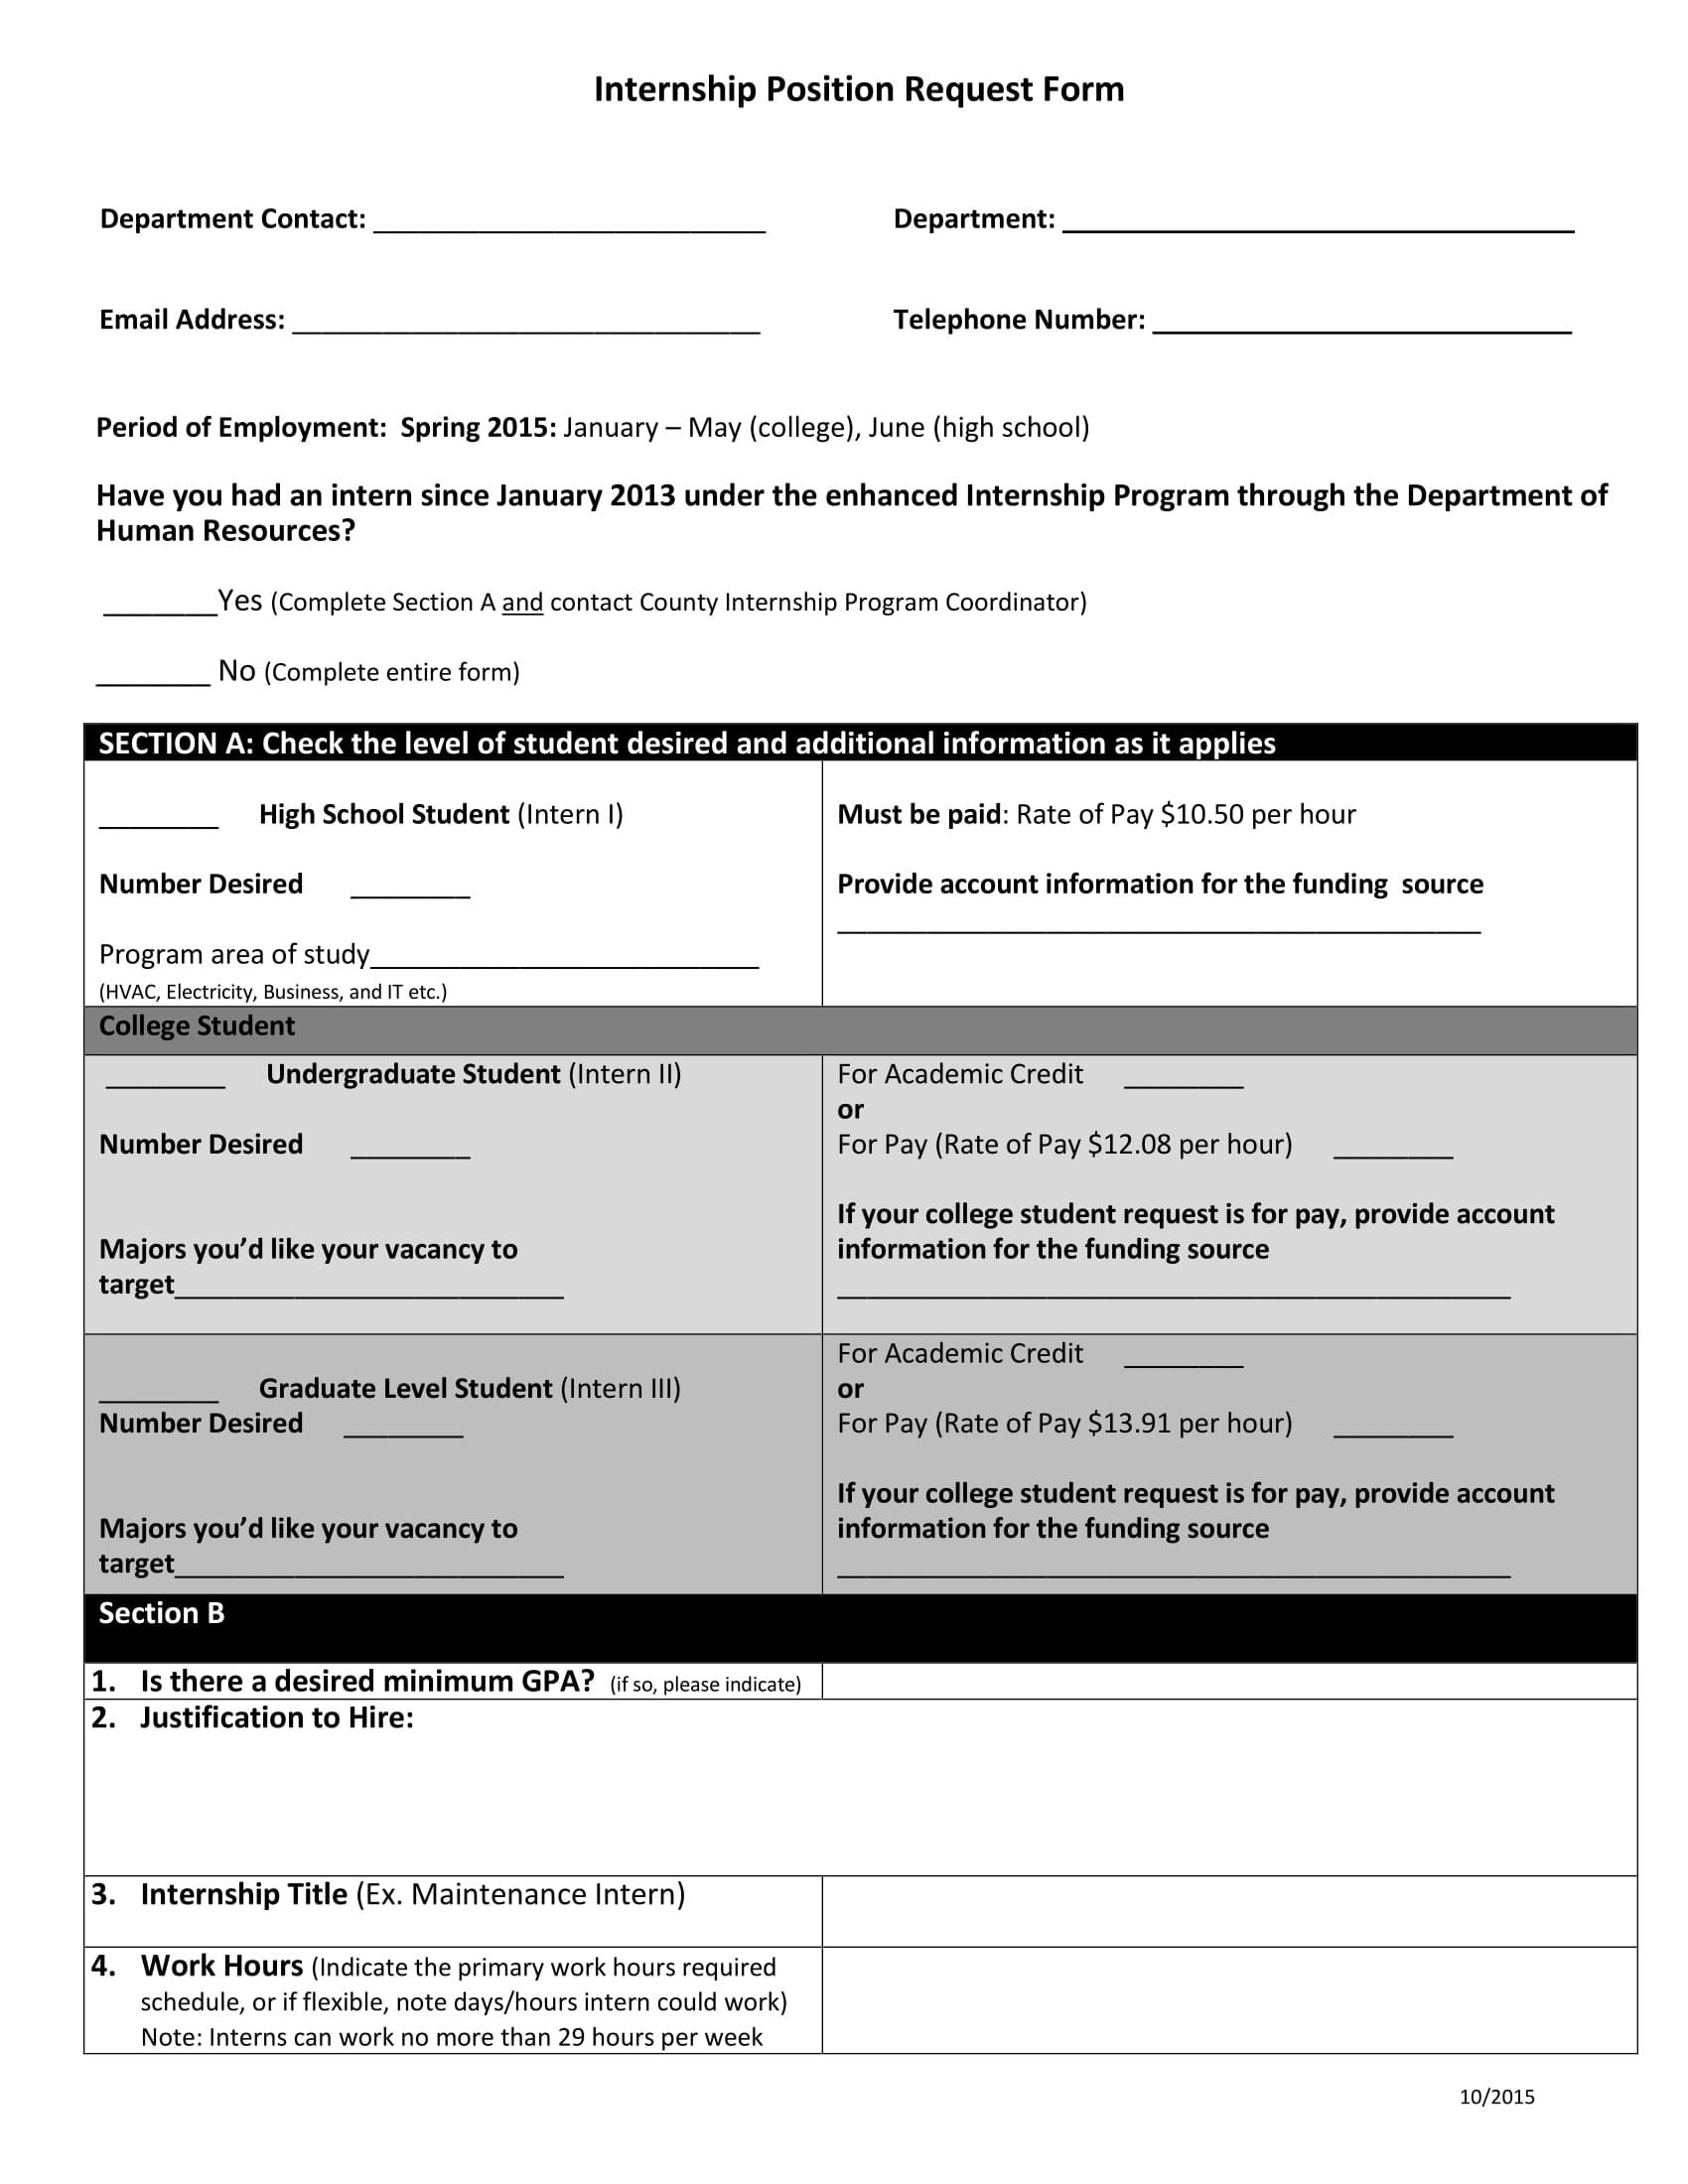 internship position request form 1